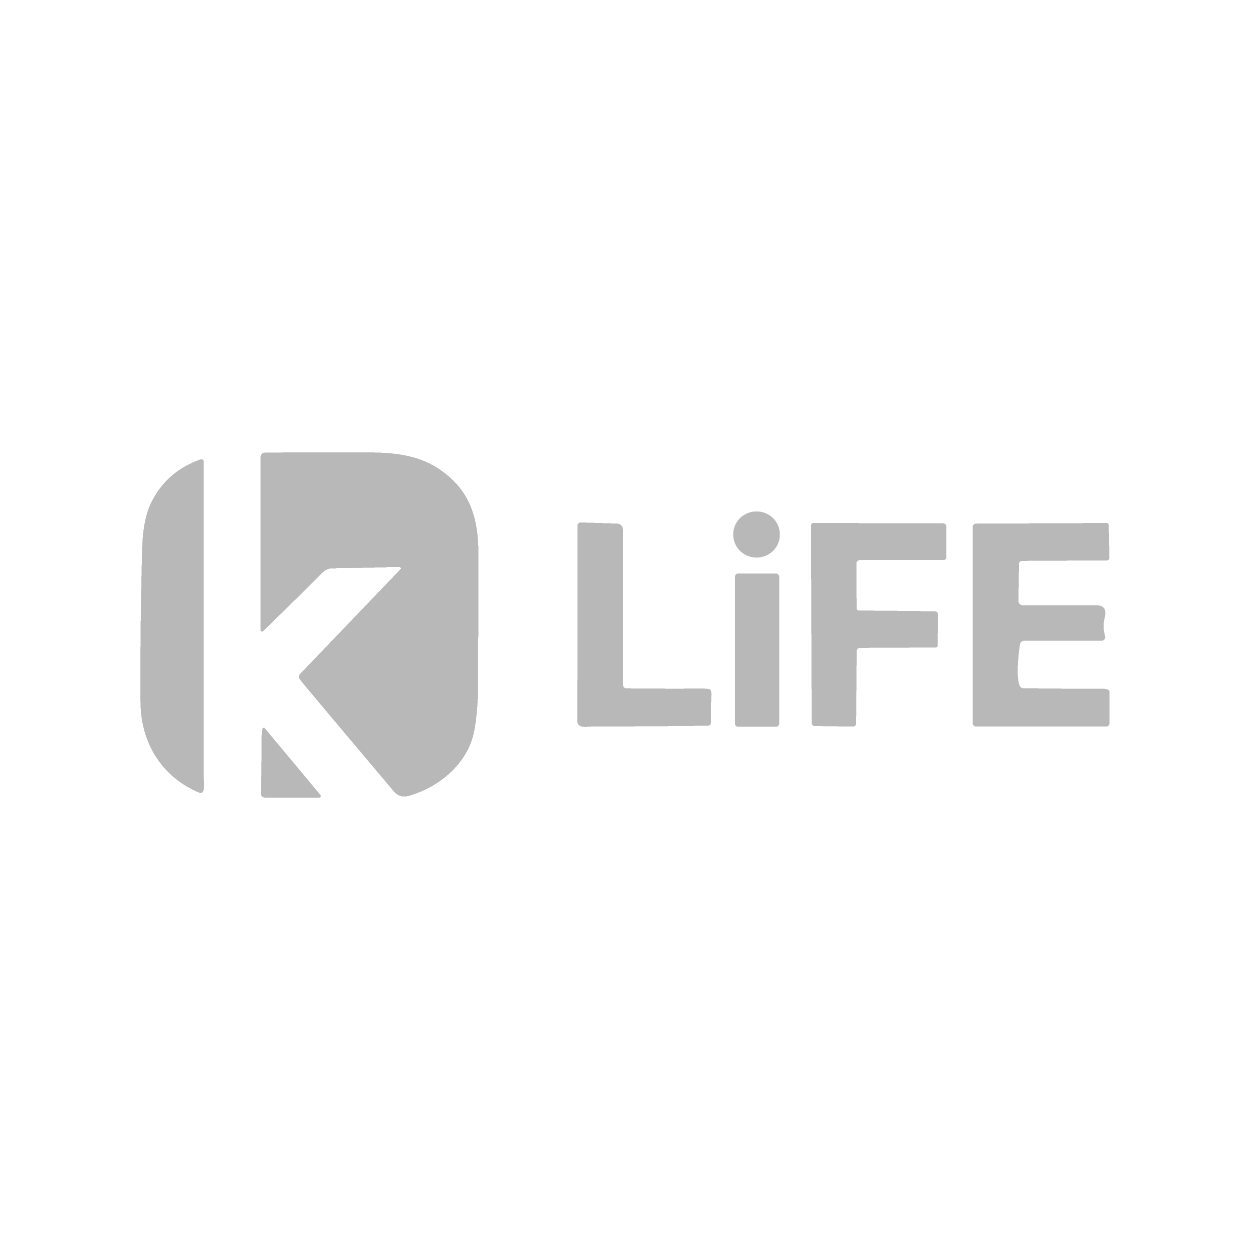 k-life